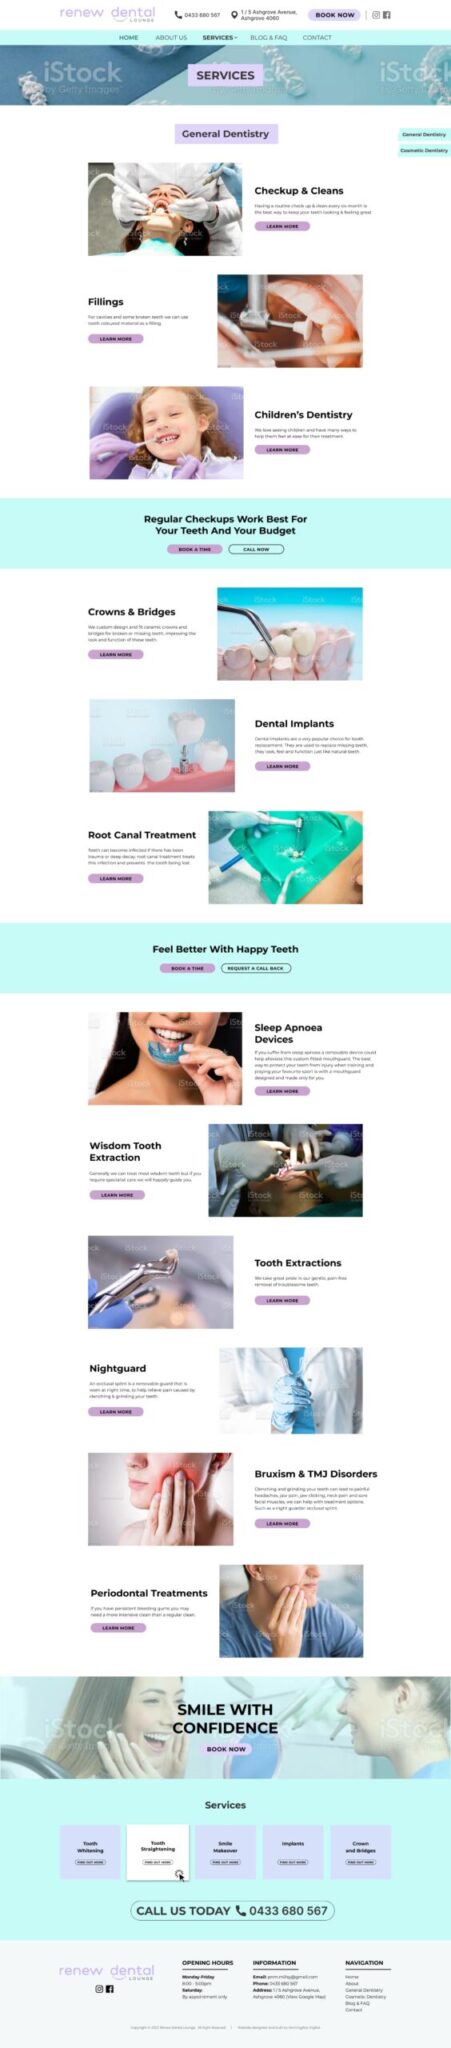 Renew Dental General Dentistry